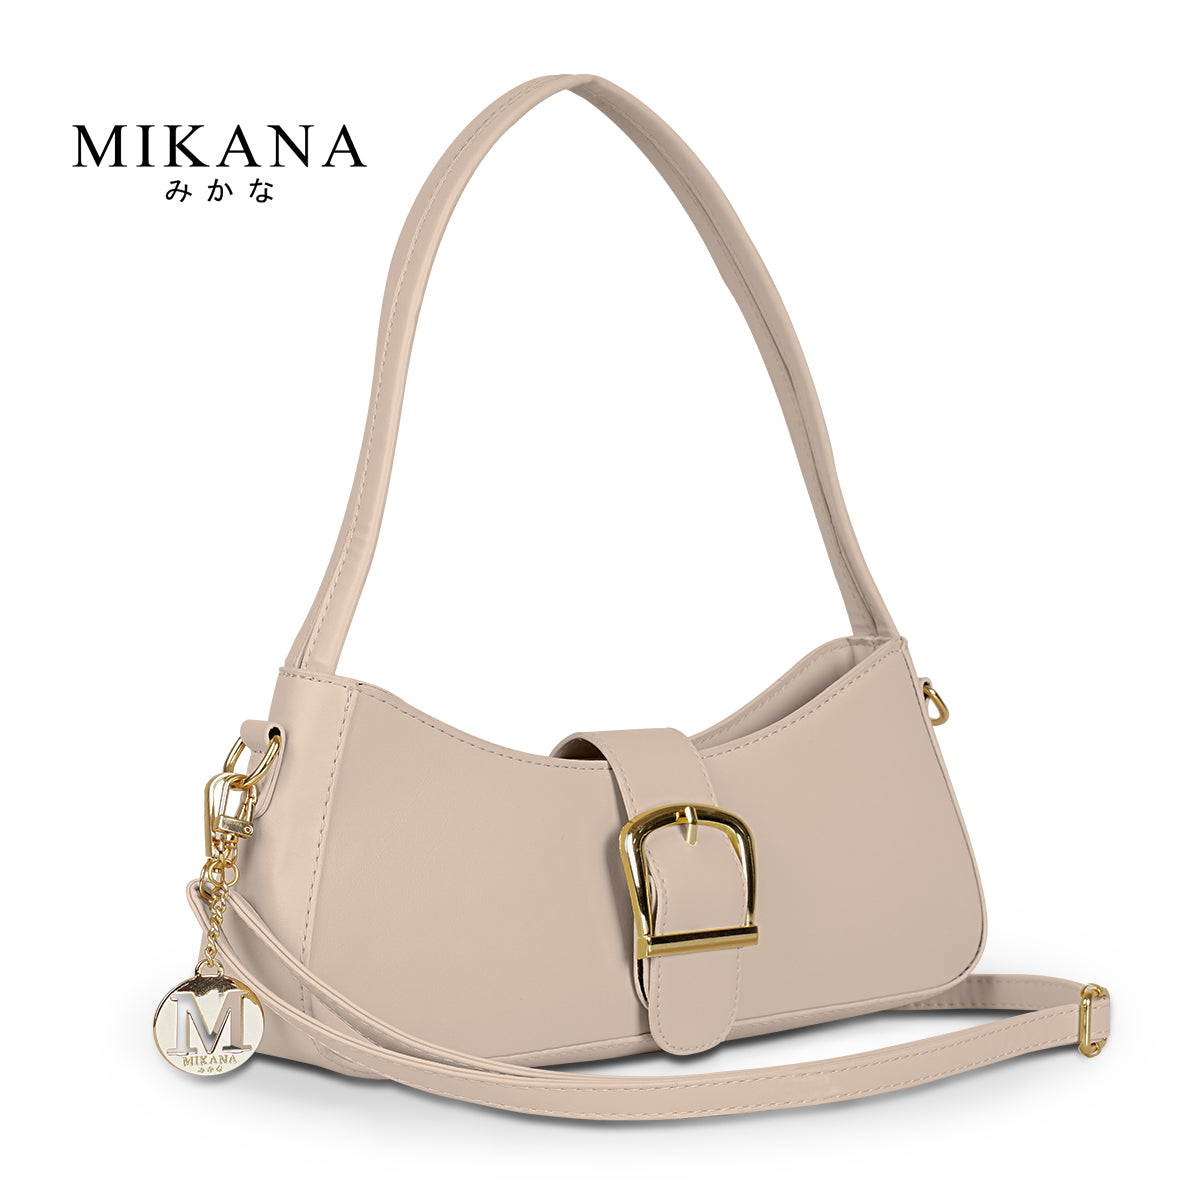 Mikana Isoyama Shoulder Bag Sling Bag for Women